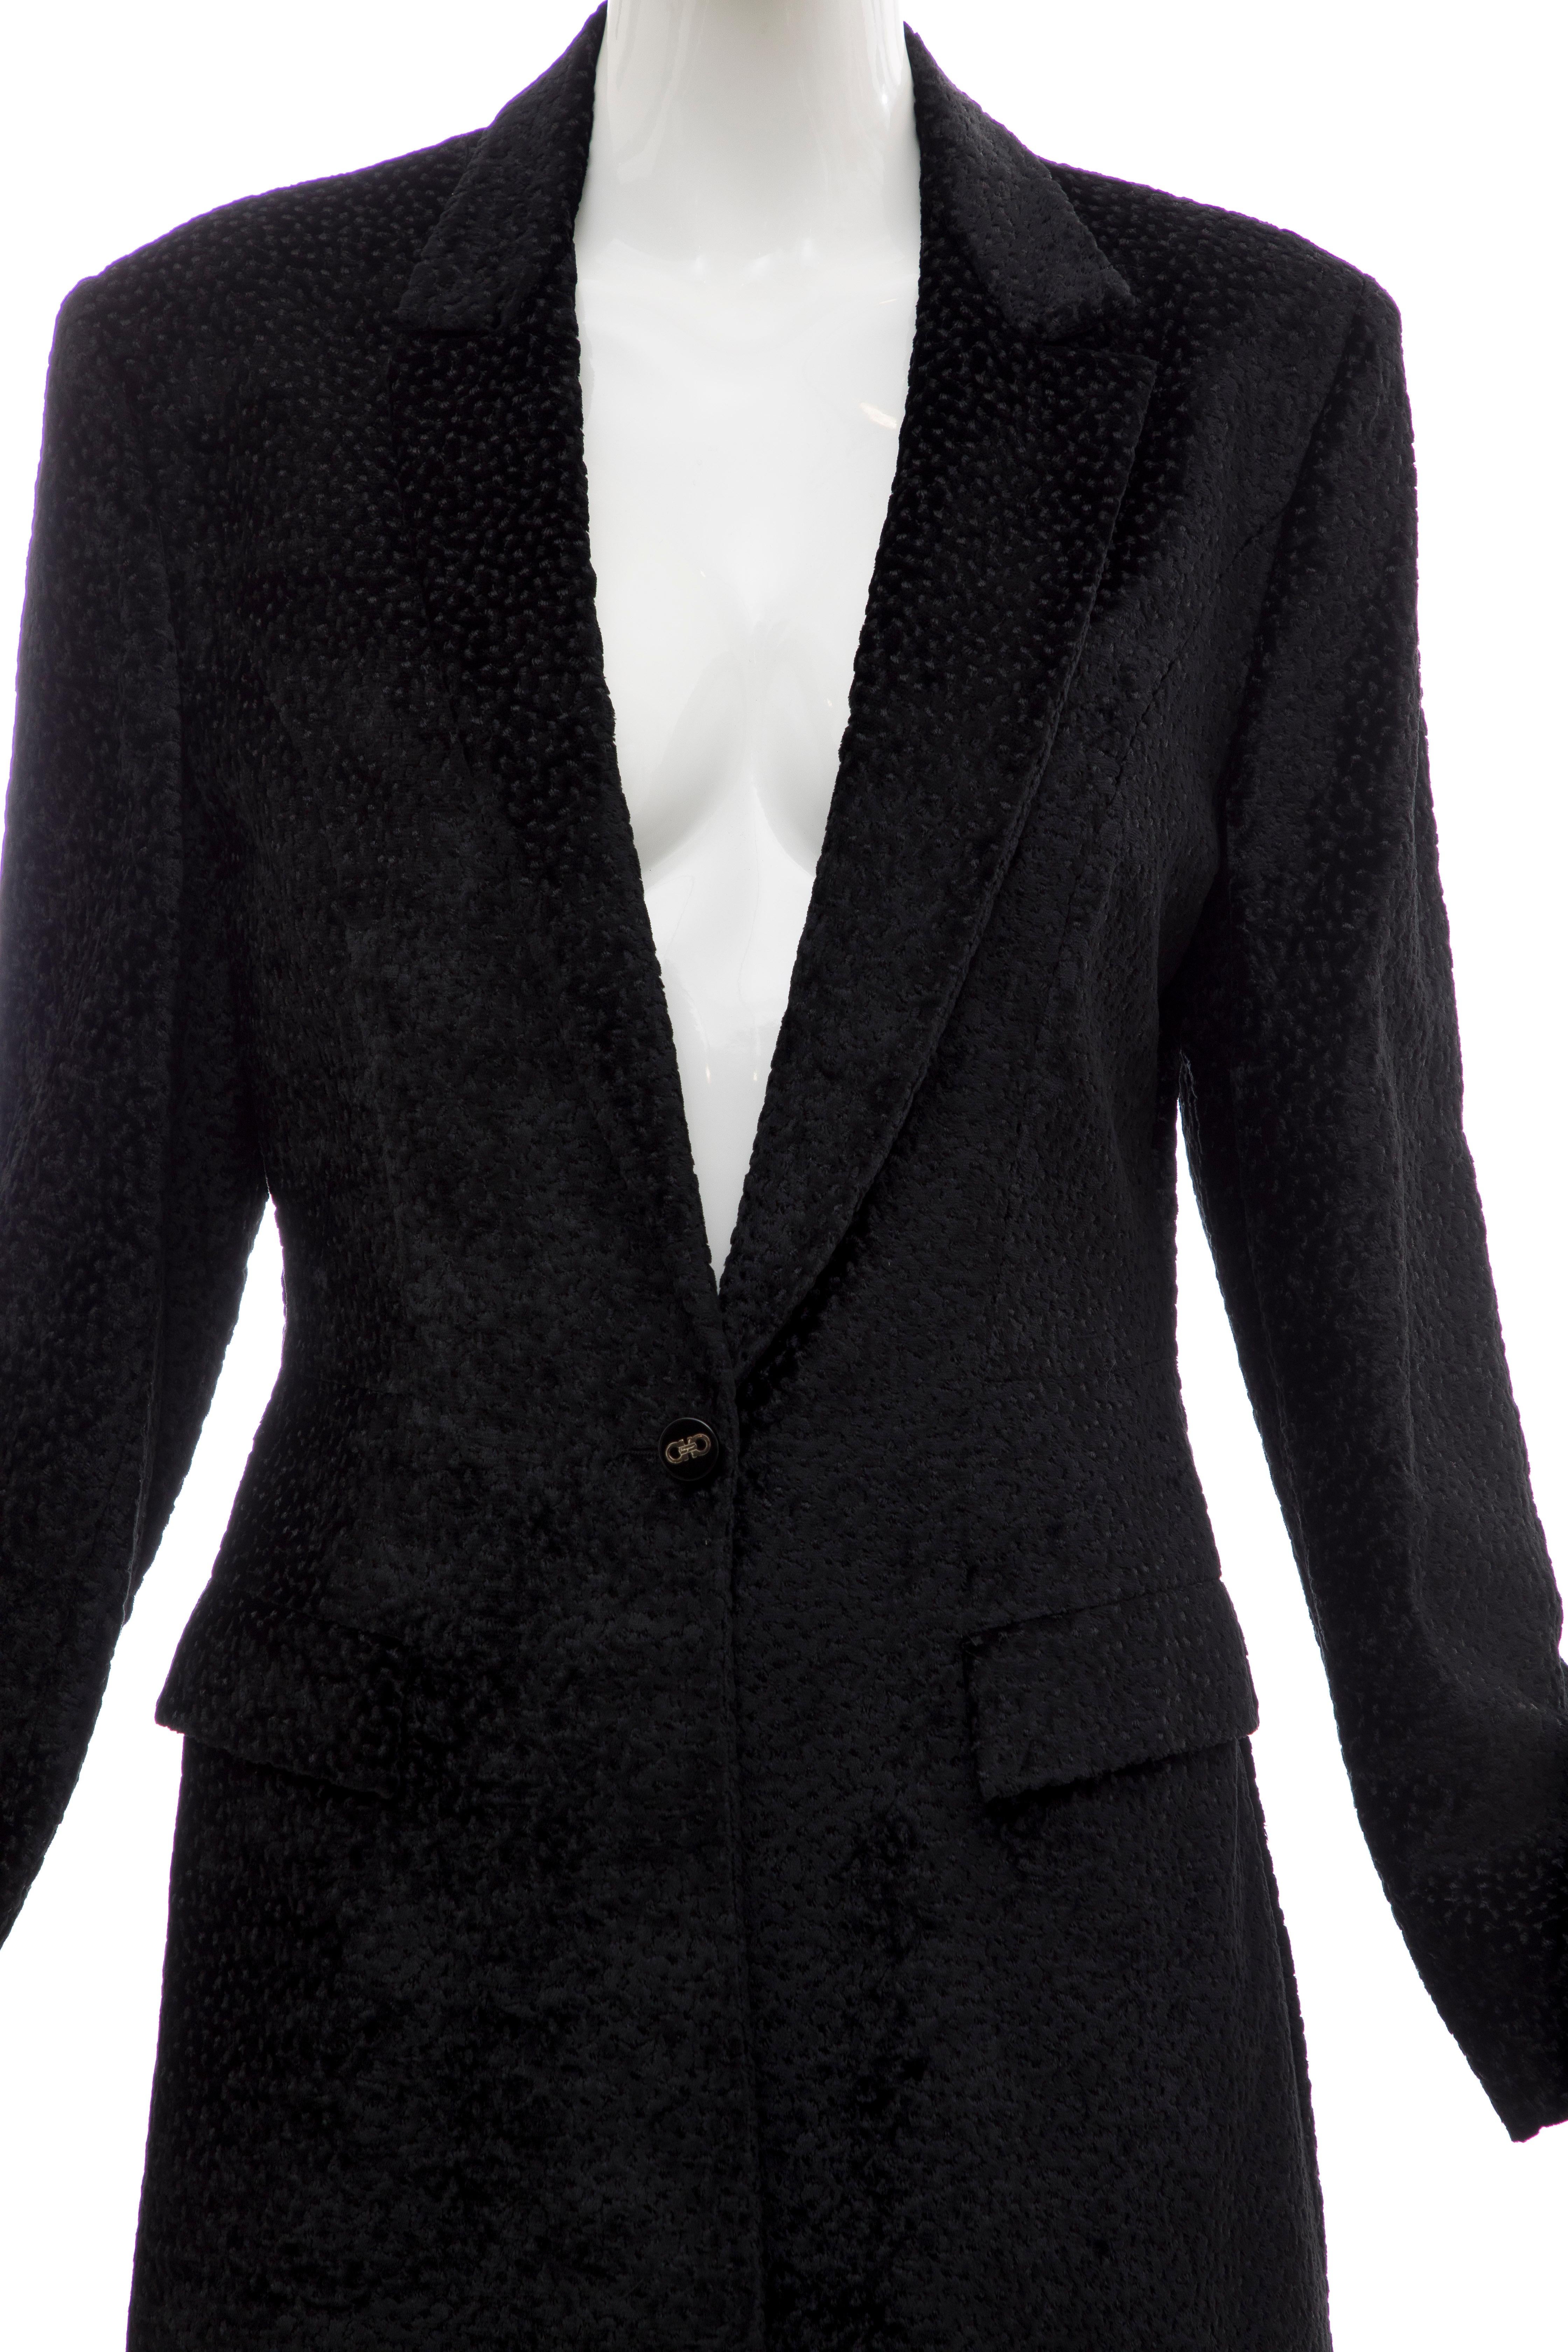 Salvatore Ferragamo Black Flecked Velvet Blazer, Circa: 1990's In Excellent Condition For Sale In Cincinnati, OH